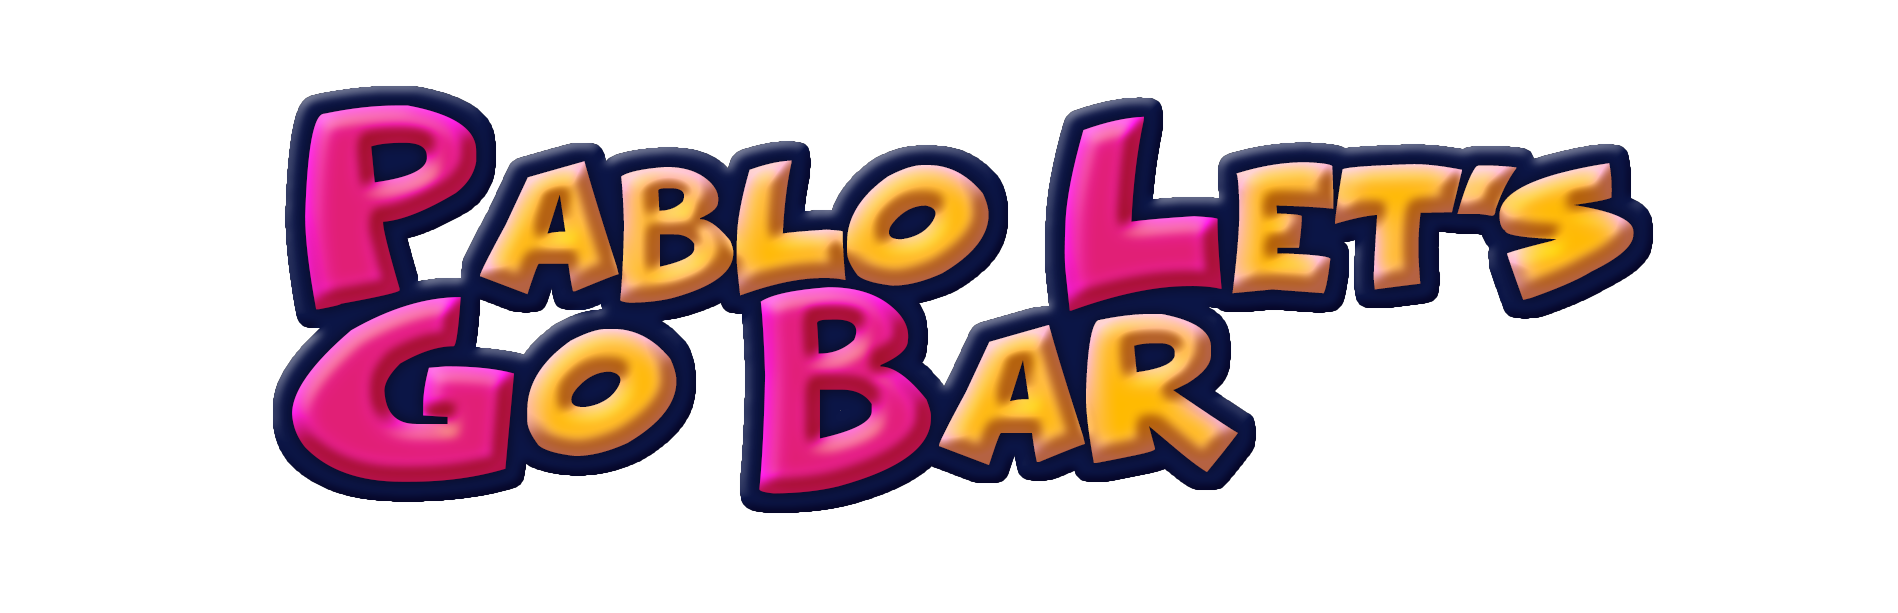 Pablo Let's Go Bar [Pre-Alpha]